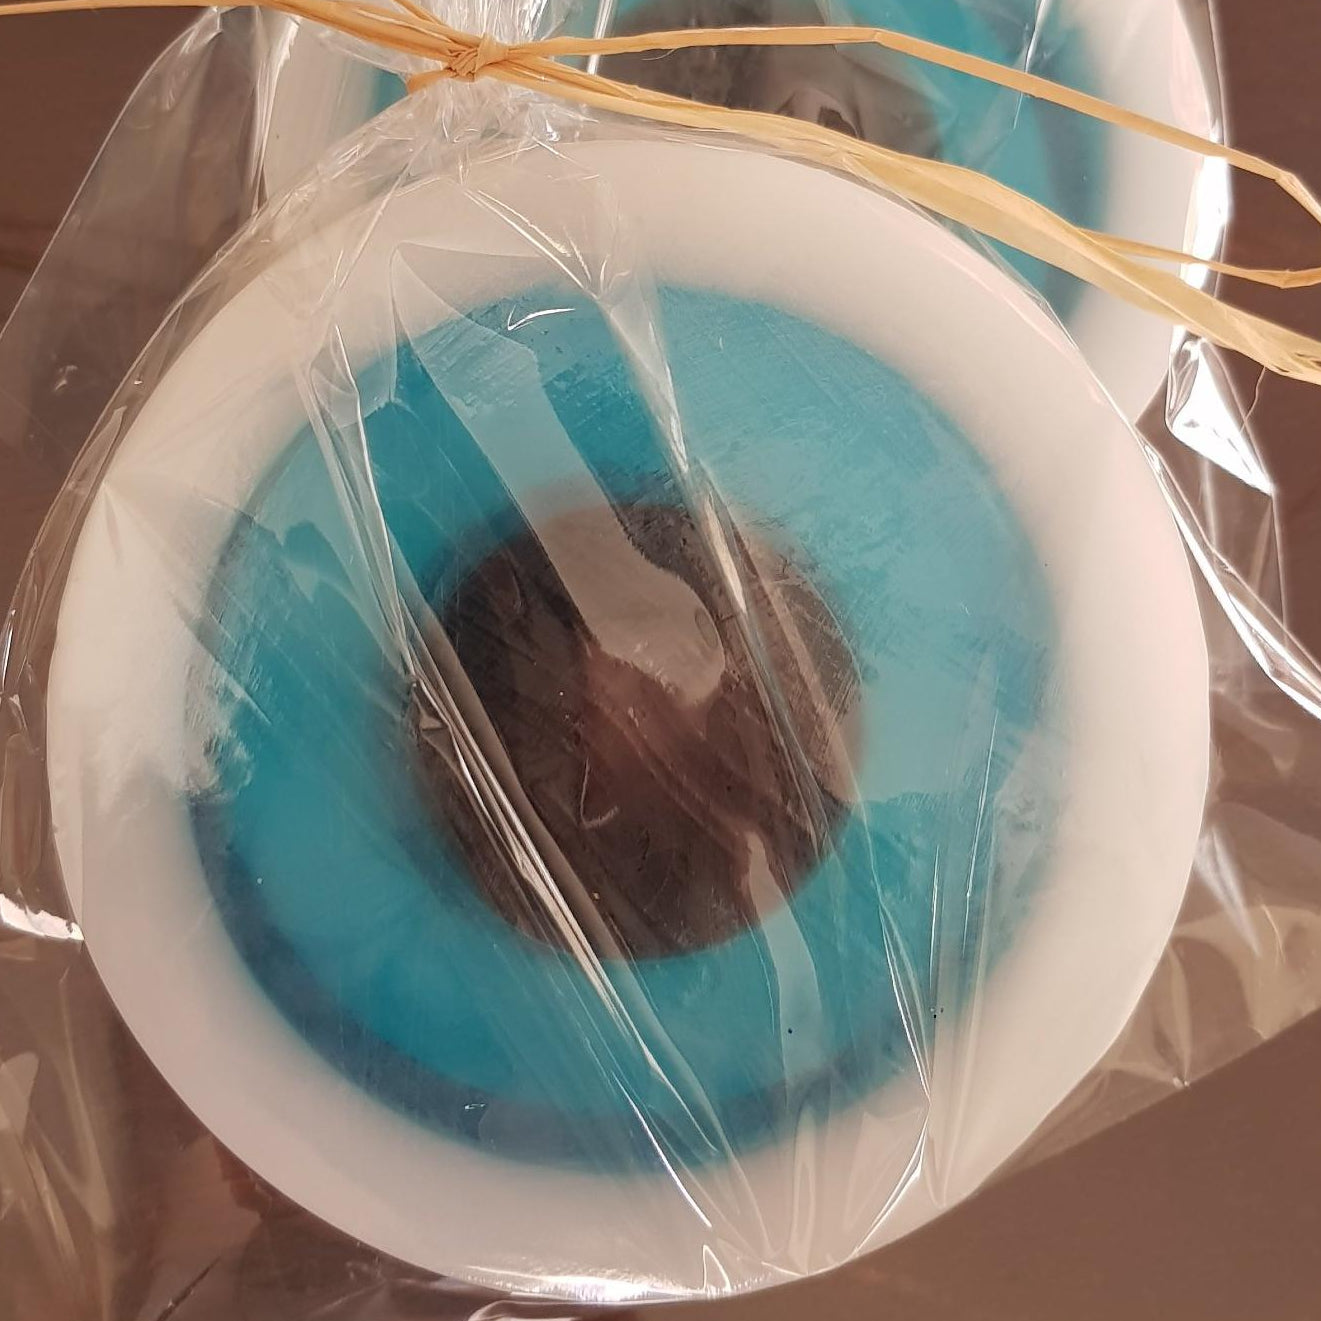 Santorini blue mati soap in cellophane